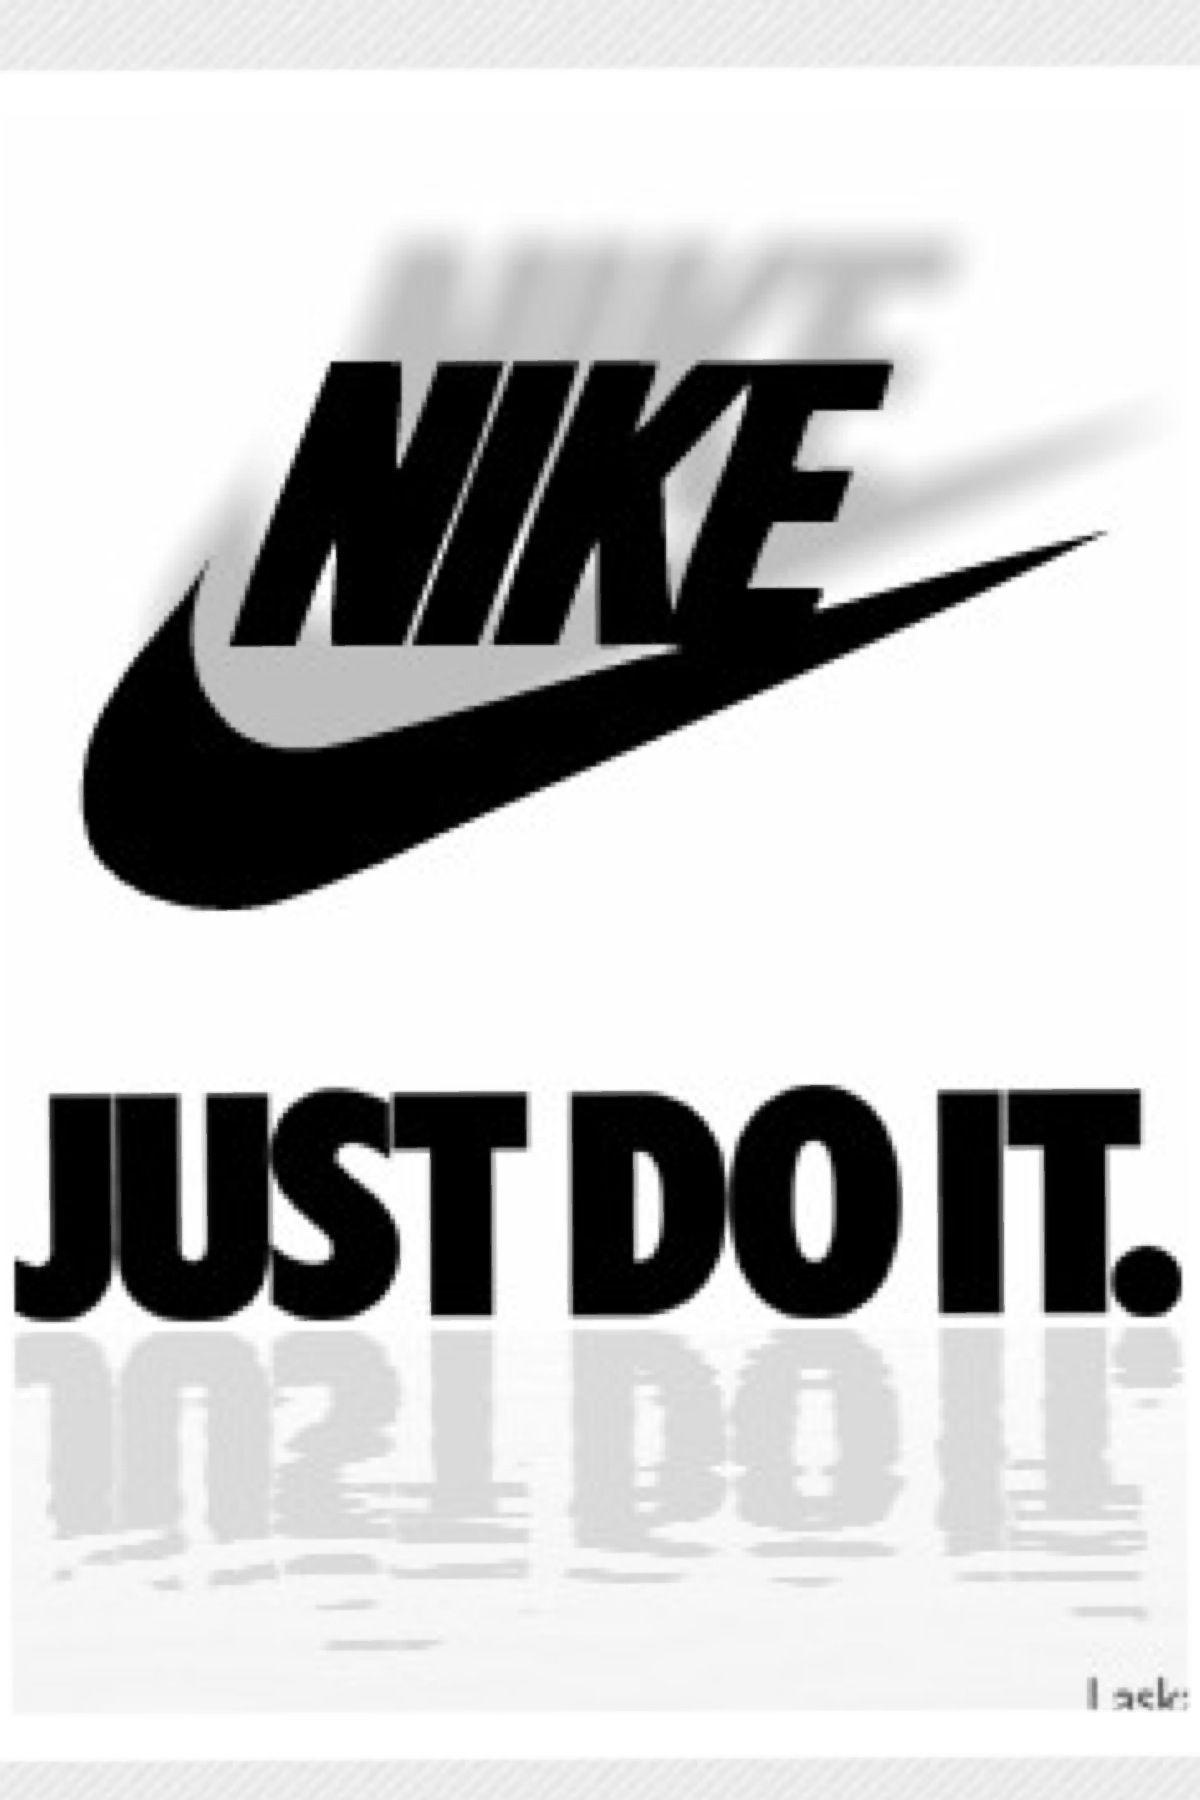 Nike Slogan and Logo - Awesome Nike sign | Nike signs | Nike, Nike signs, Slogan